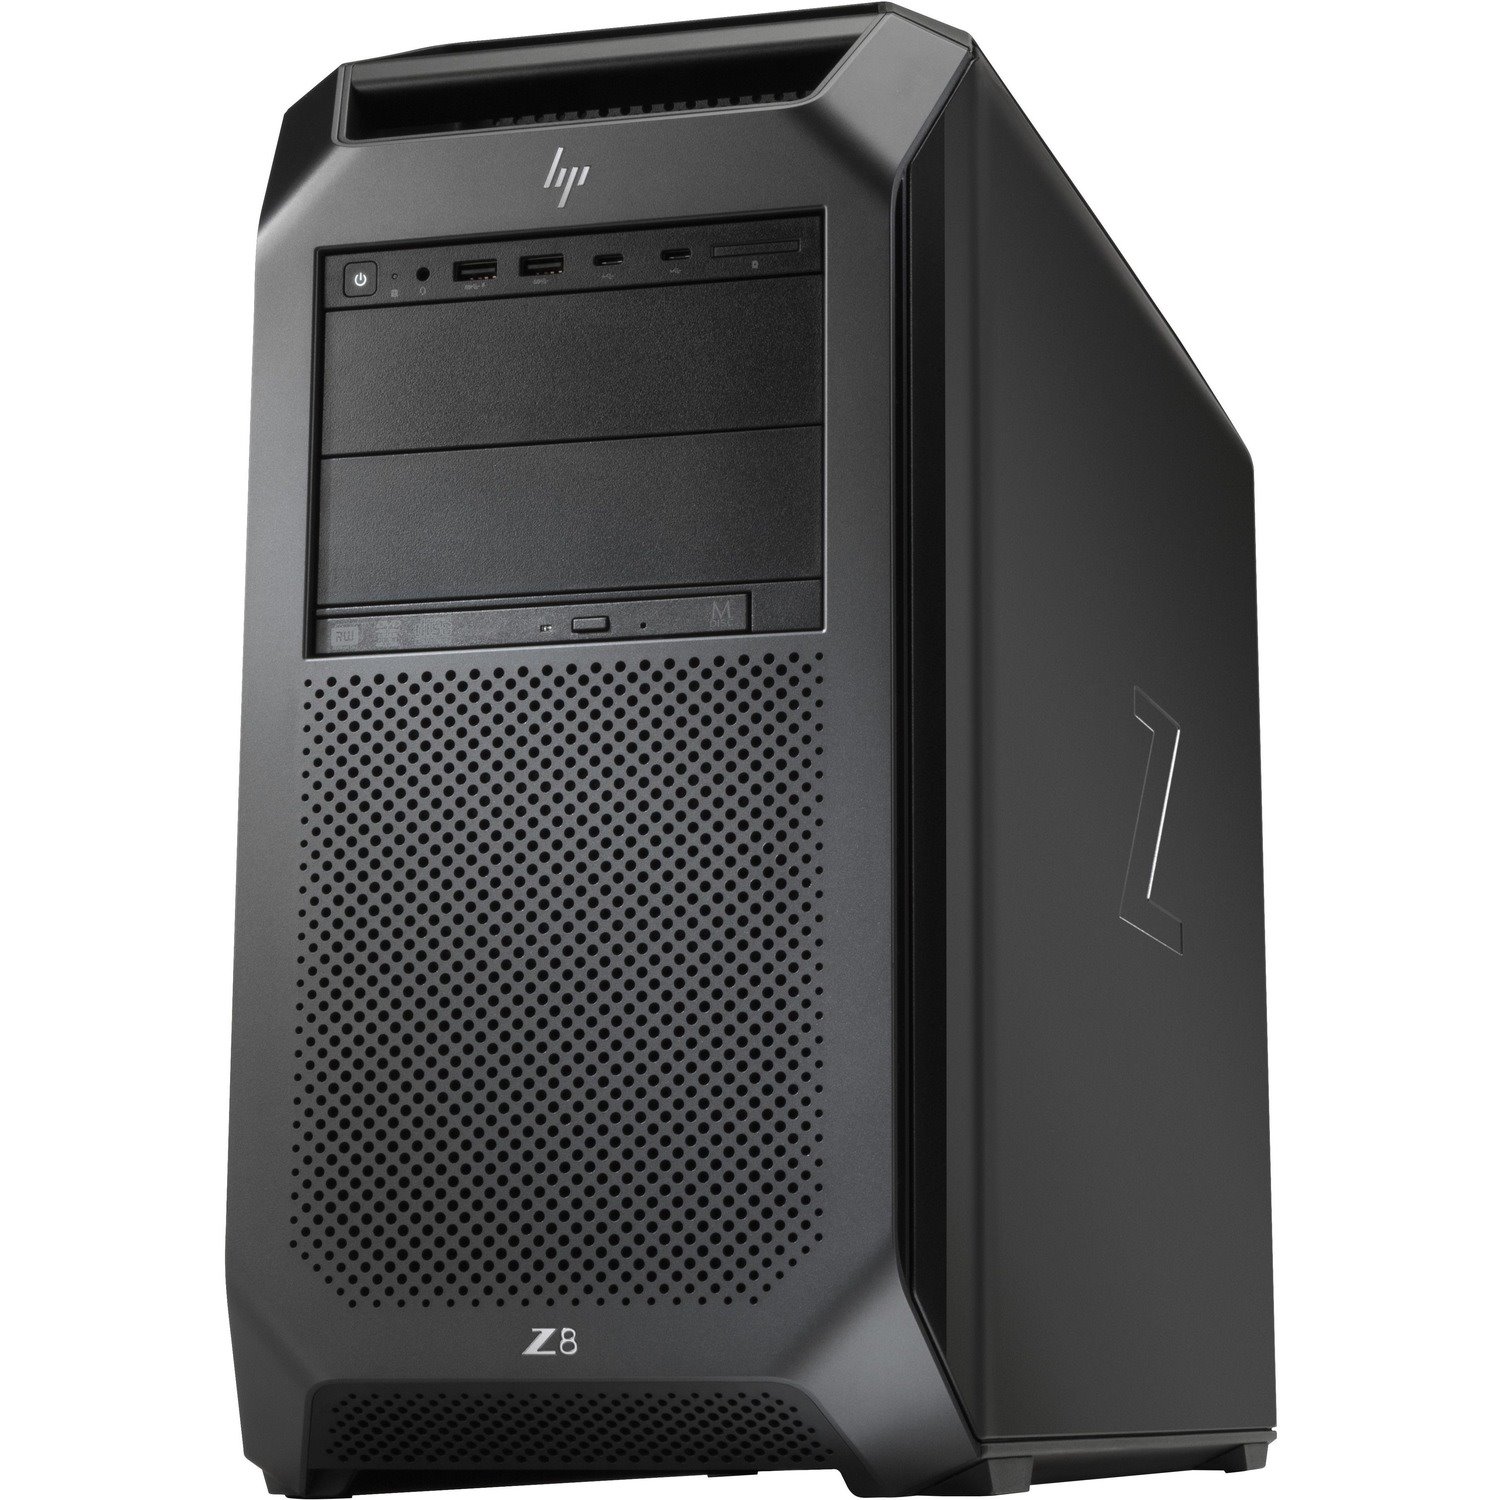 HP Z8 G4 Workstation - Intel Xeon Silver 4214 - 32 GB - 256 GB SSD - Tower - Black